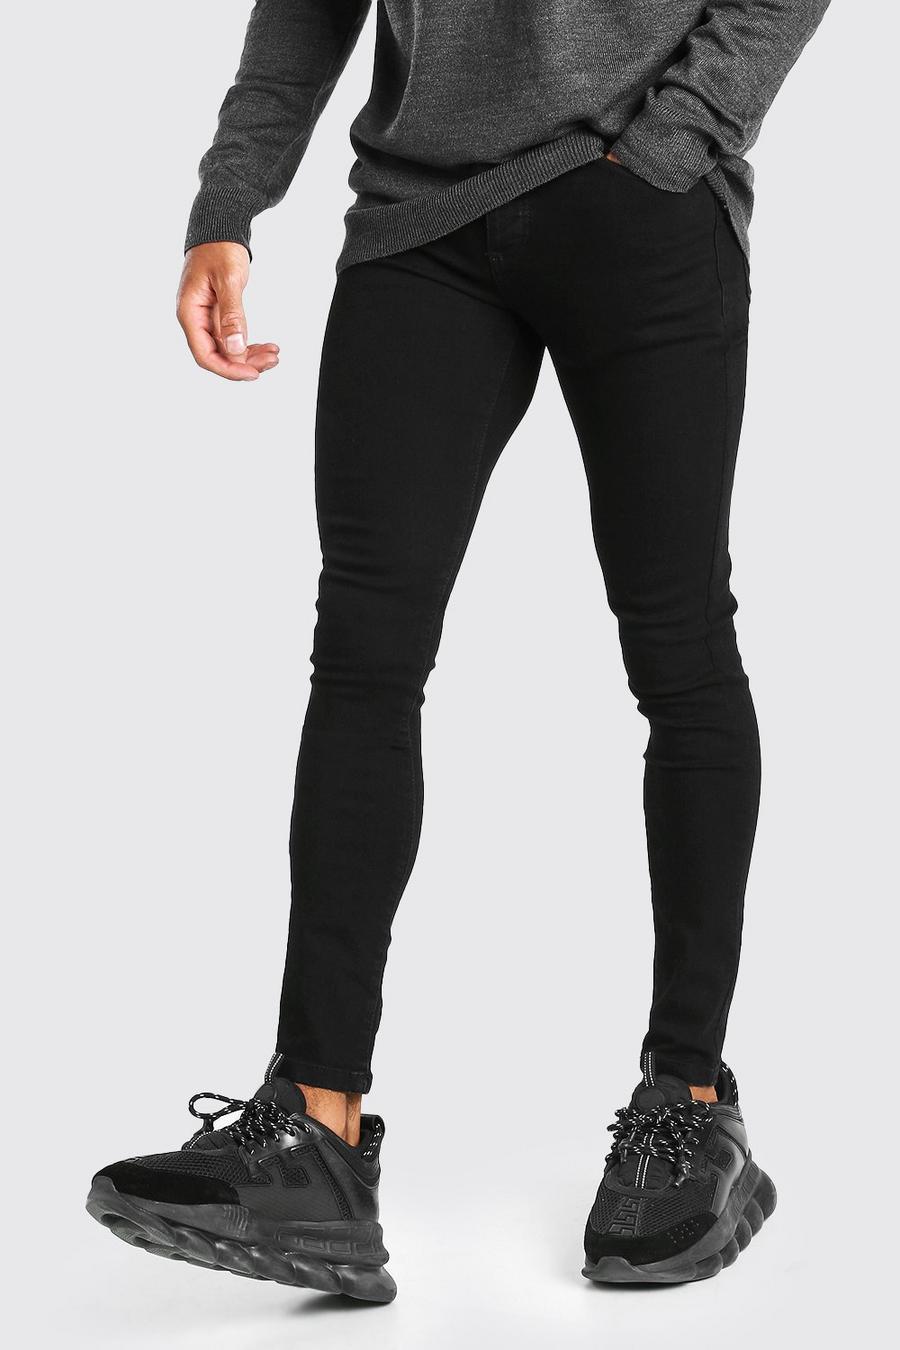 https://media.boohoo.com/i/boohoo/mzz21327_black_xl/male-black-super-skinny-jeans/?w=900&qlt=default&fmt.jp2.qlt=70&fmt=auto&sm=fit